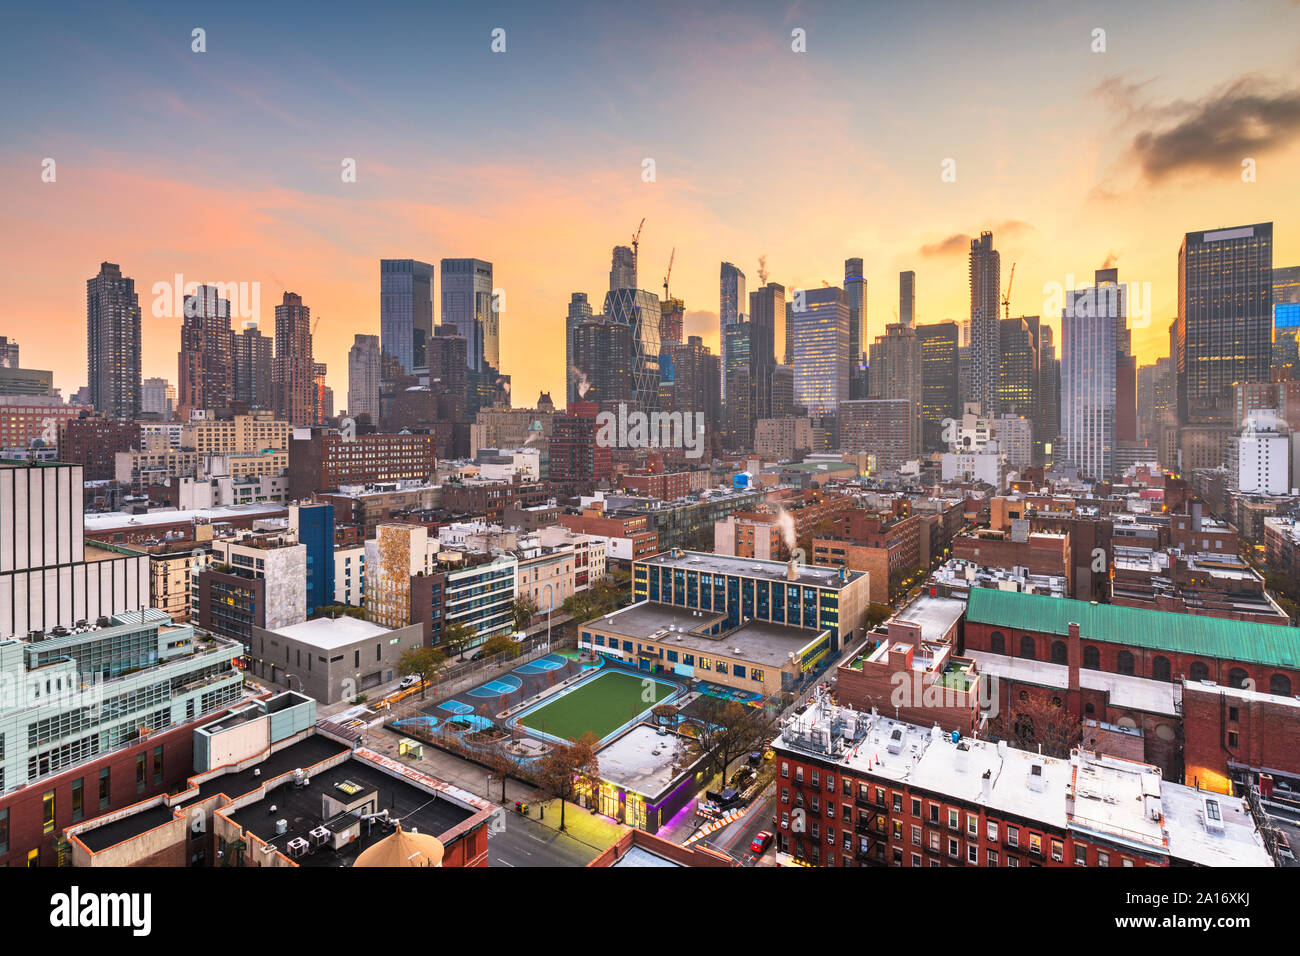 New York, New York, Stati Uniti d'America midtown skyline di Manhattan su Hell's Kitchen all'alba. Foto Stock